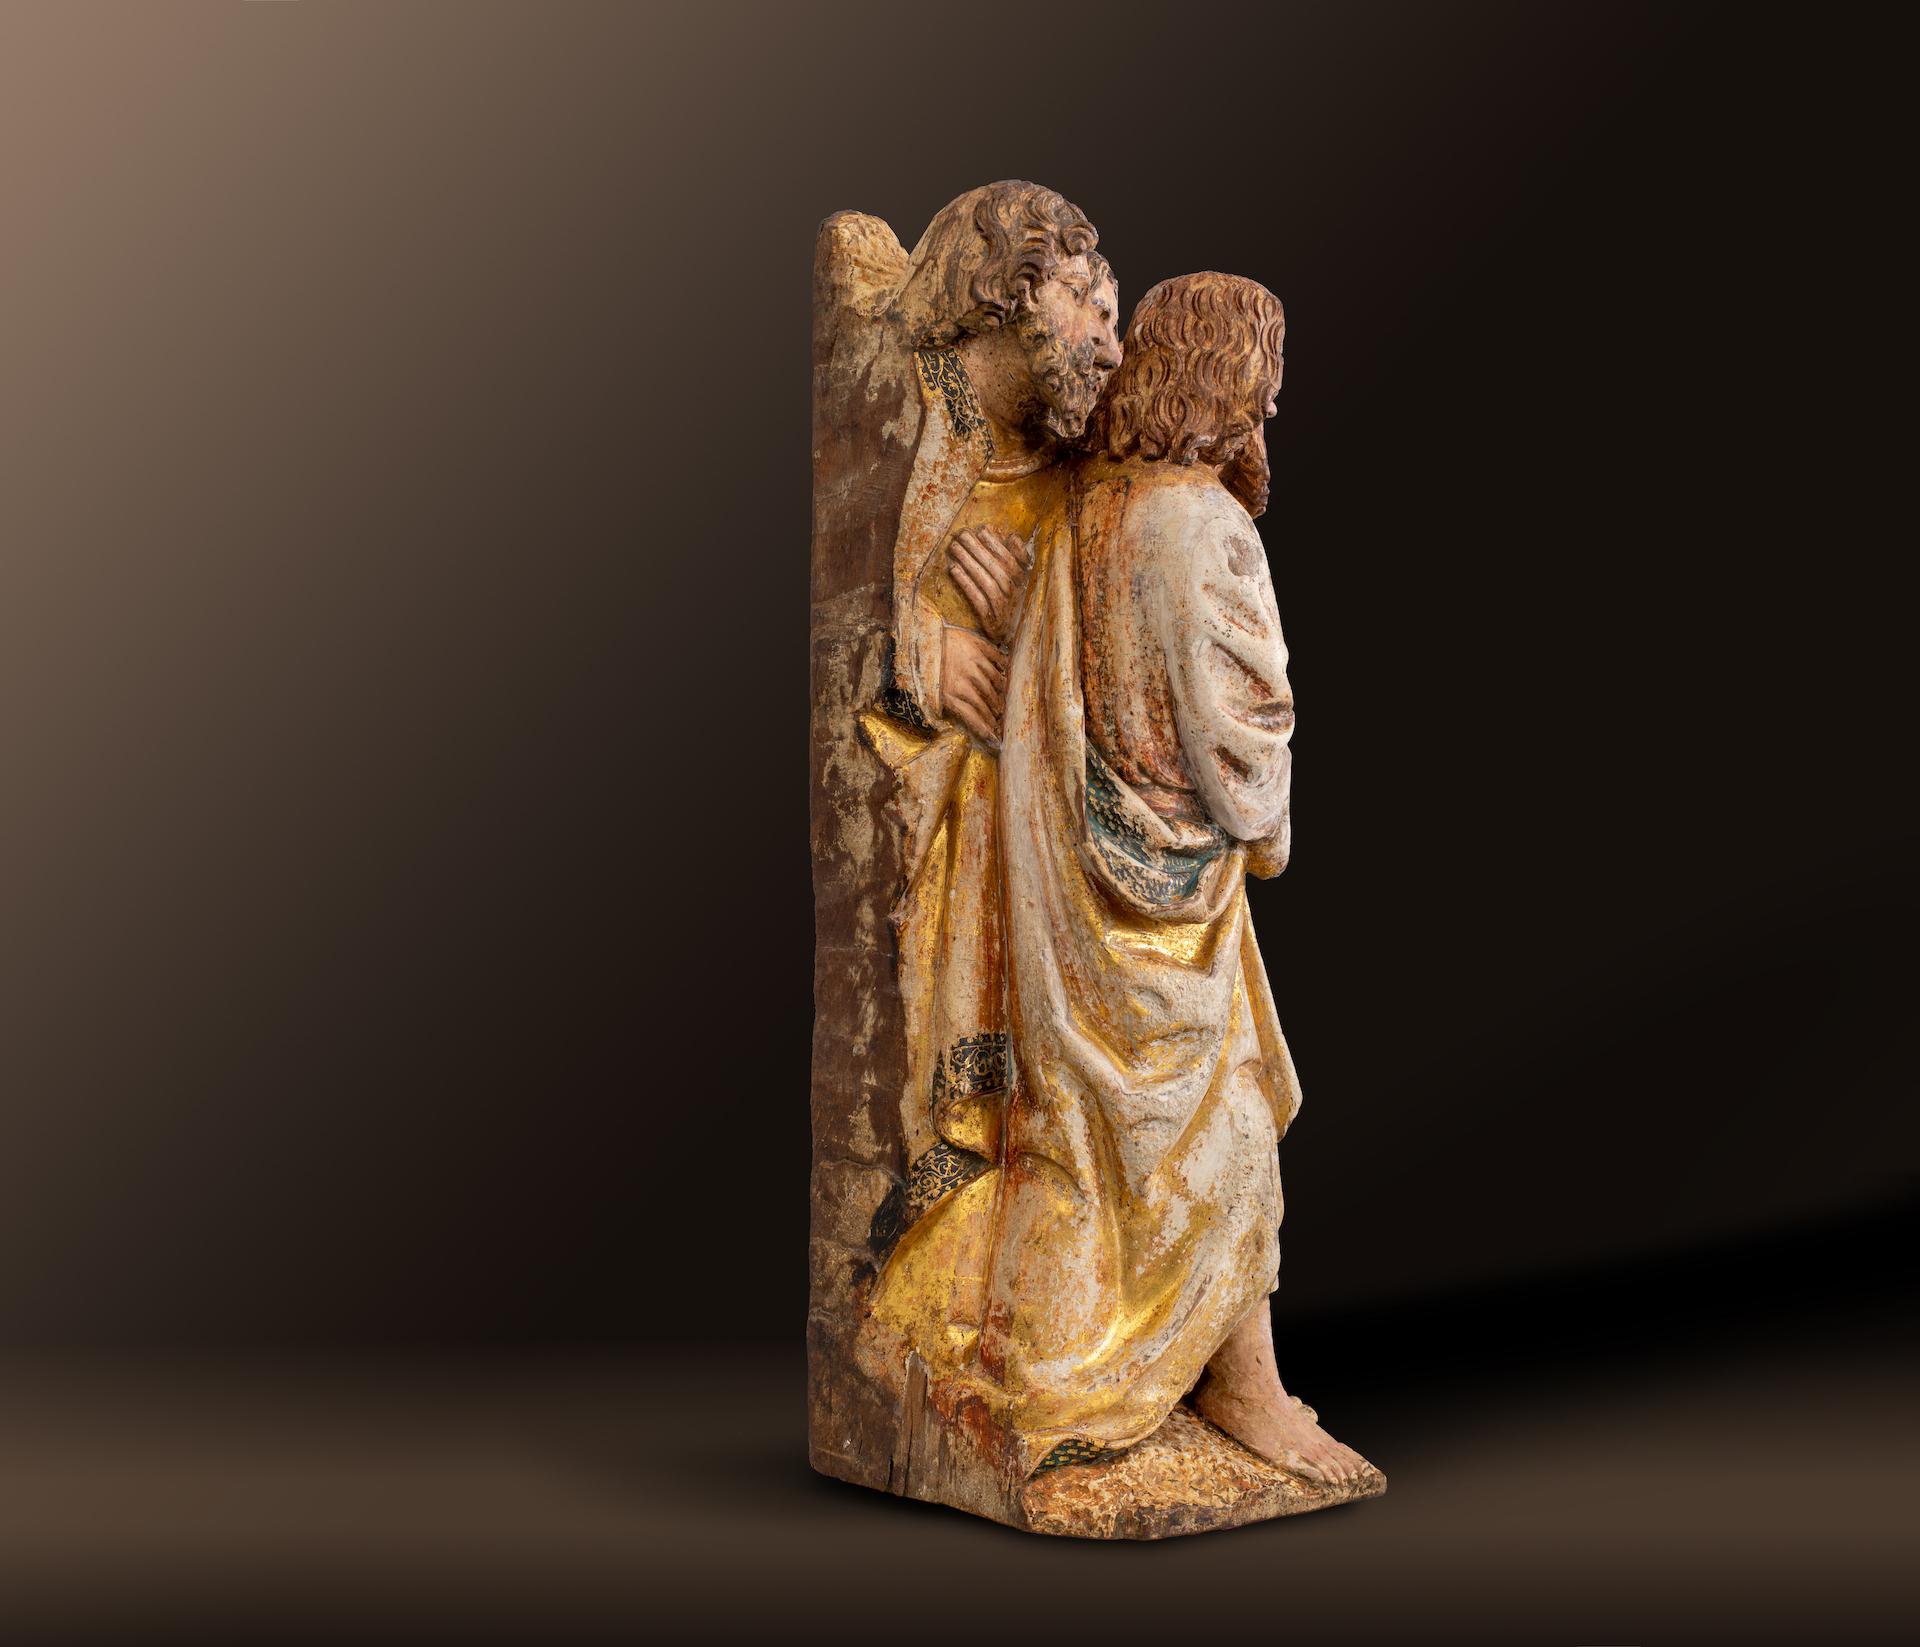 APOSTLE GROUP
ORIGINAL VERSION
Flemish/Brabant
Around 1500
Oak wood carved
Height 37.5 cm, width 12 cm,
Depth 12.5 cm